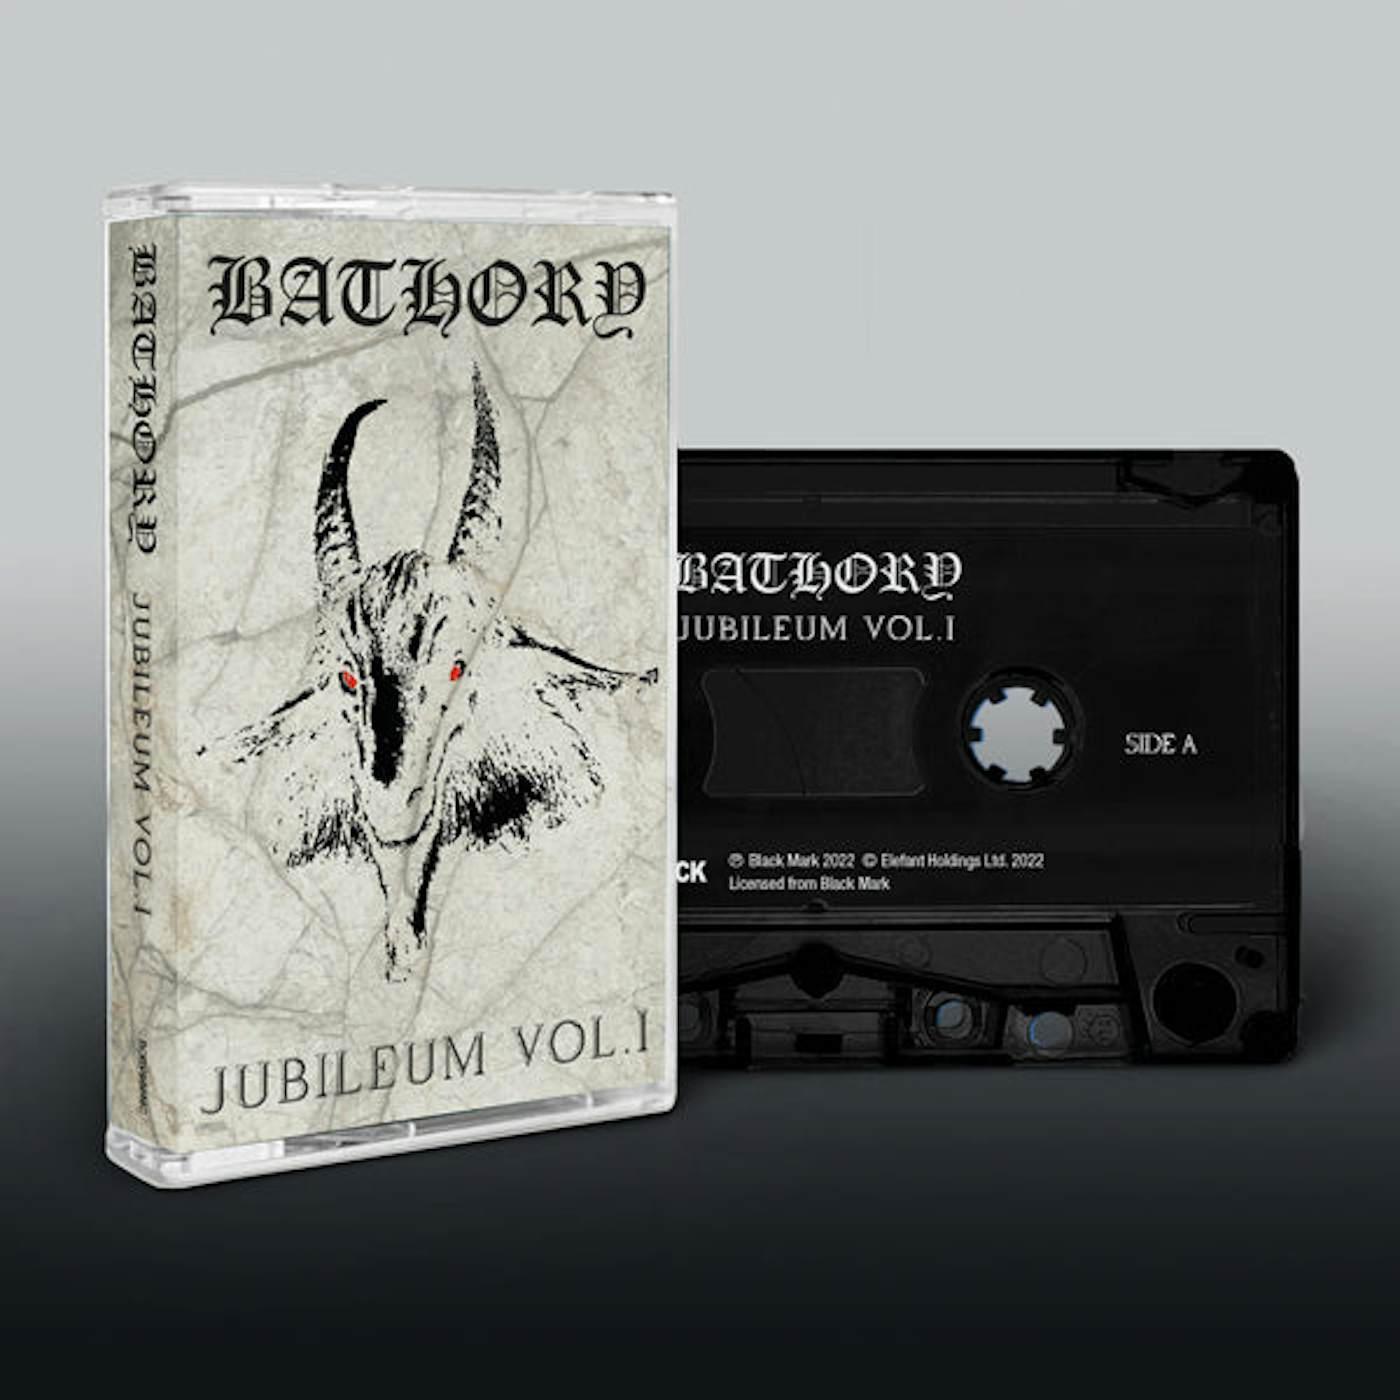 Bathory Music Cassette - Jubileum Vol 1